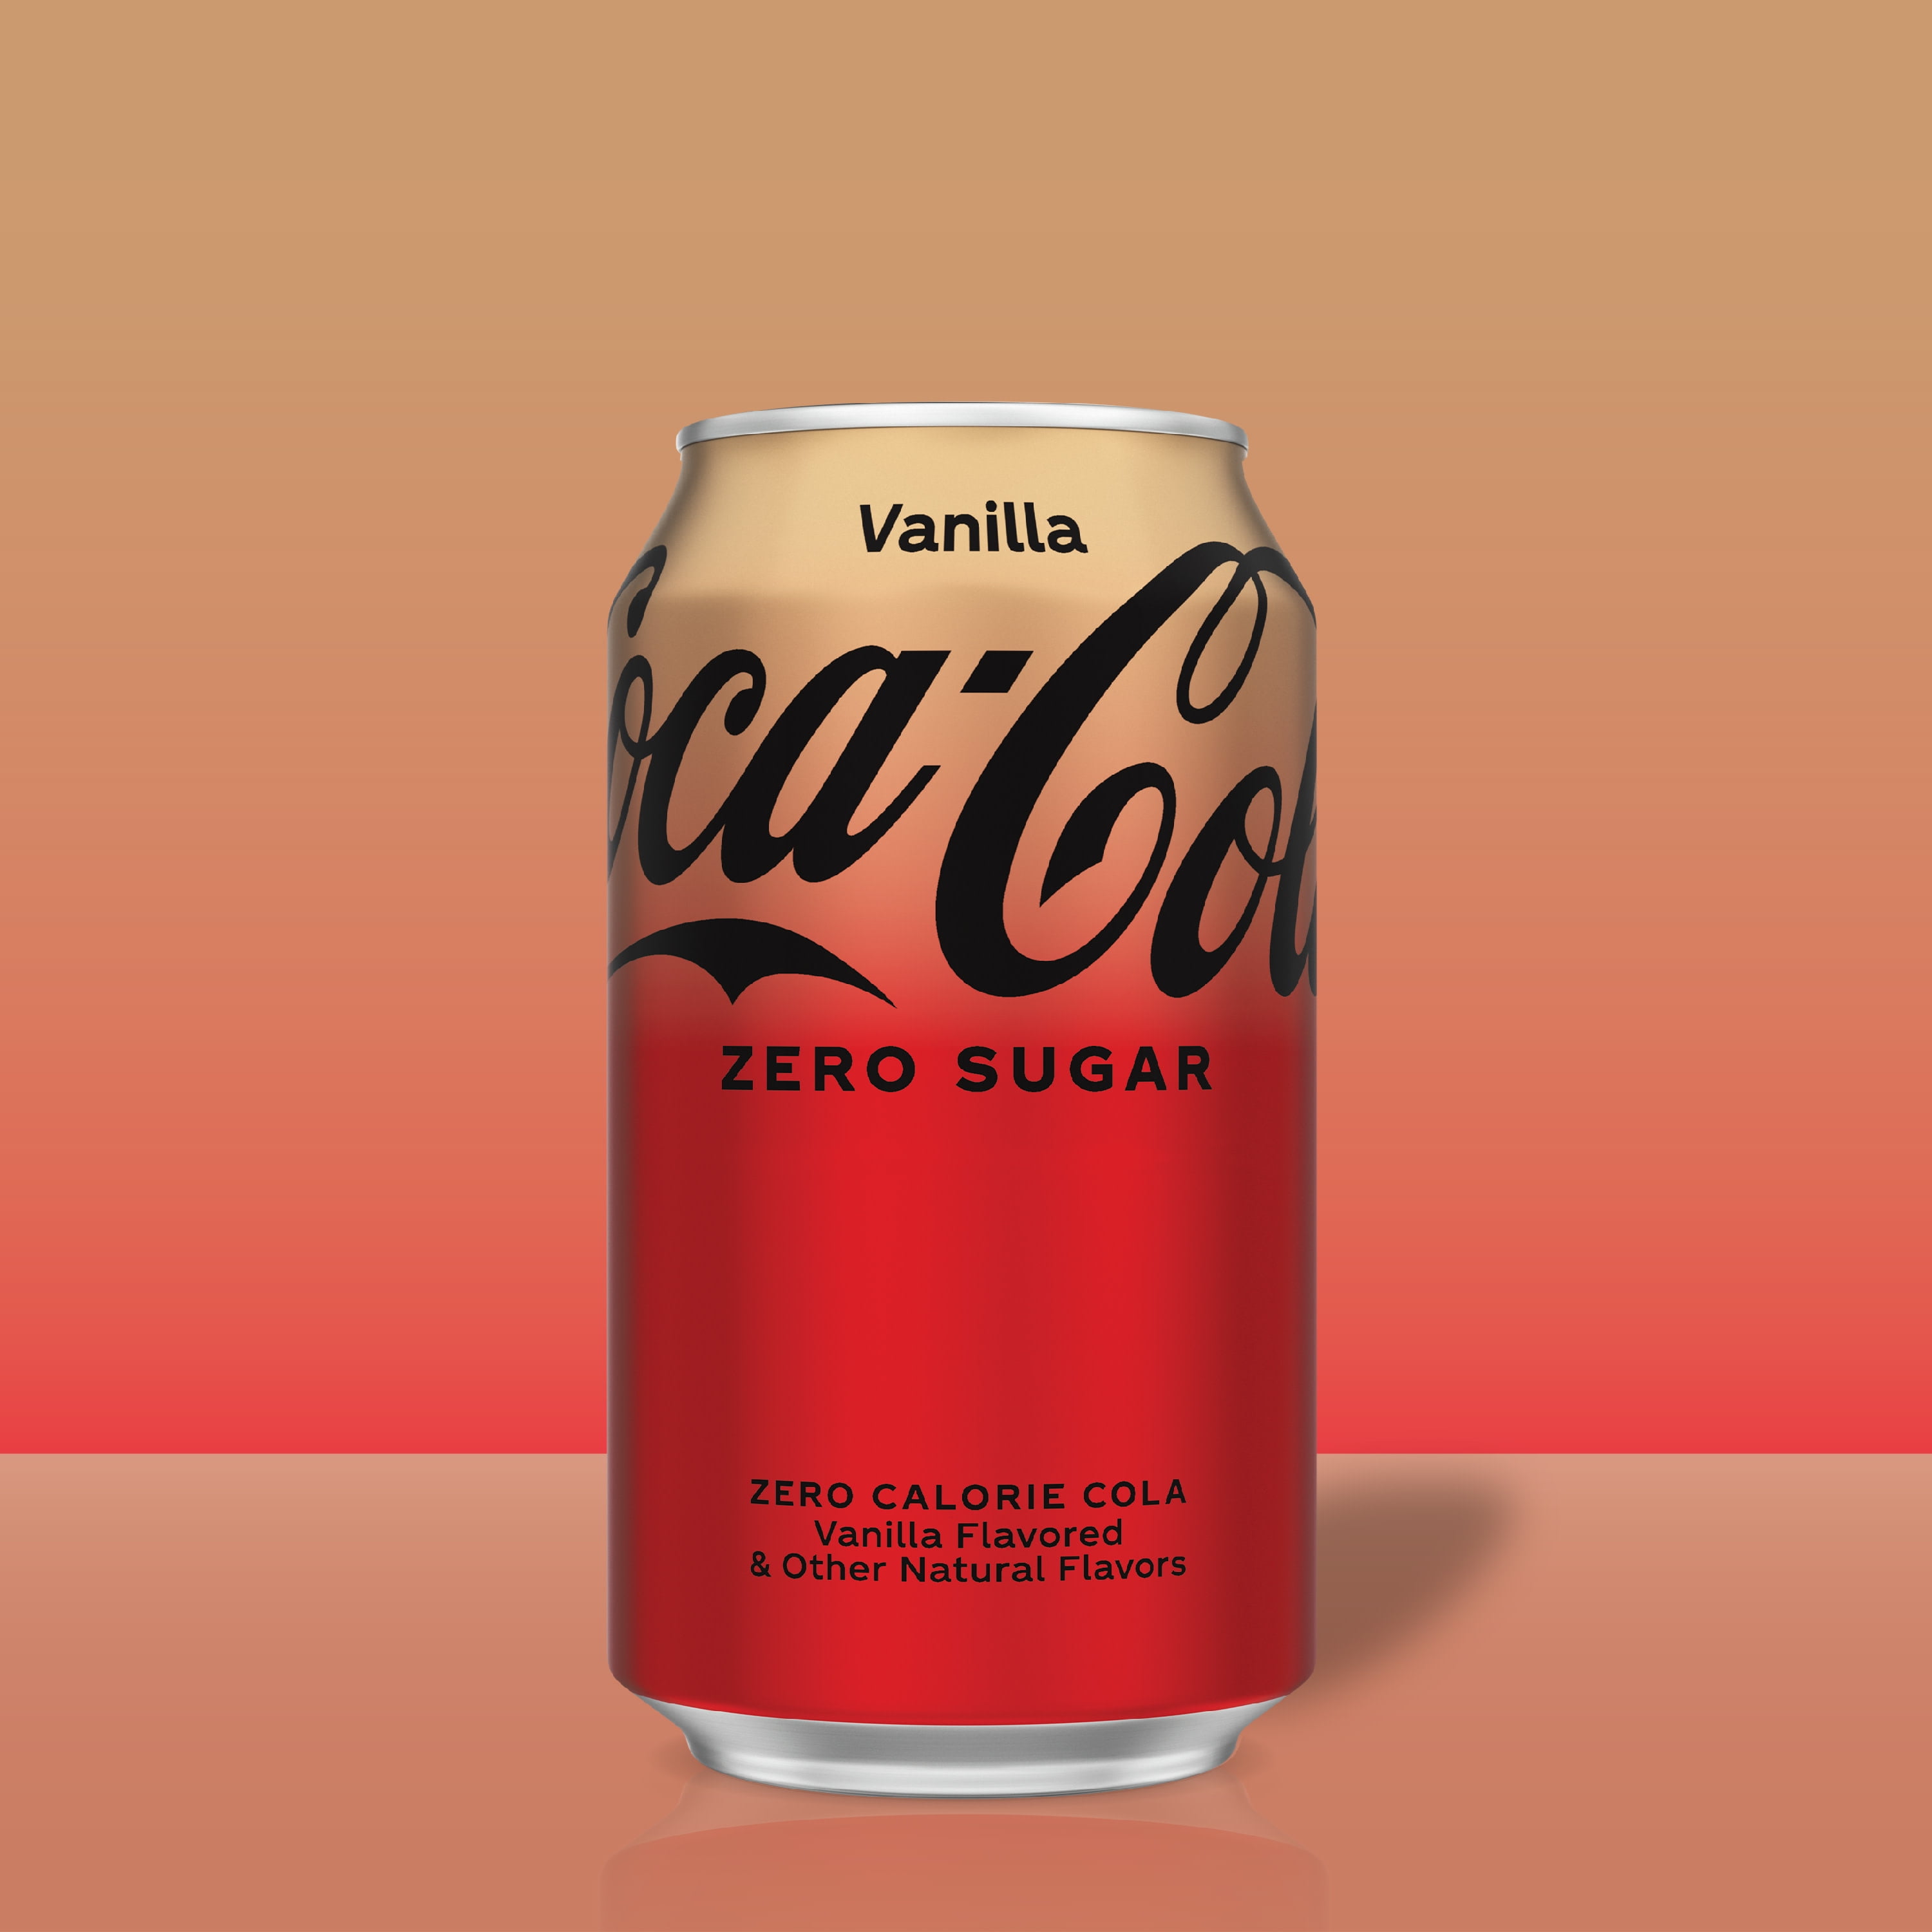 Coca-cola Zero Vanilla Calorie Free, 144 Fl. Oz (Pack of 2) By Goinsane